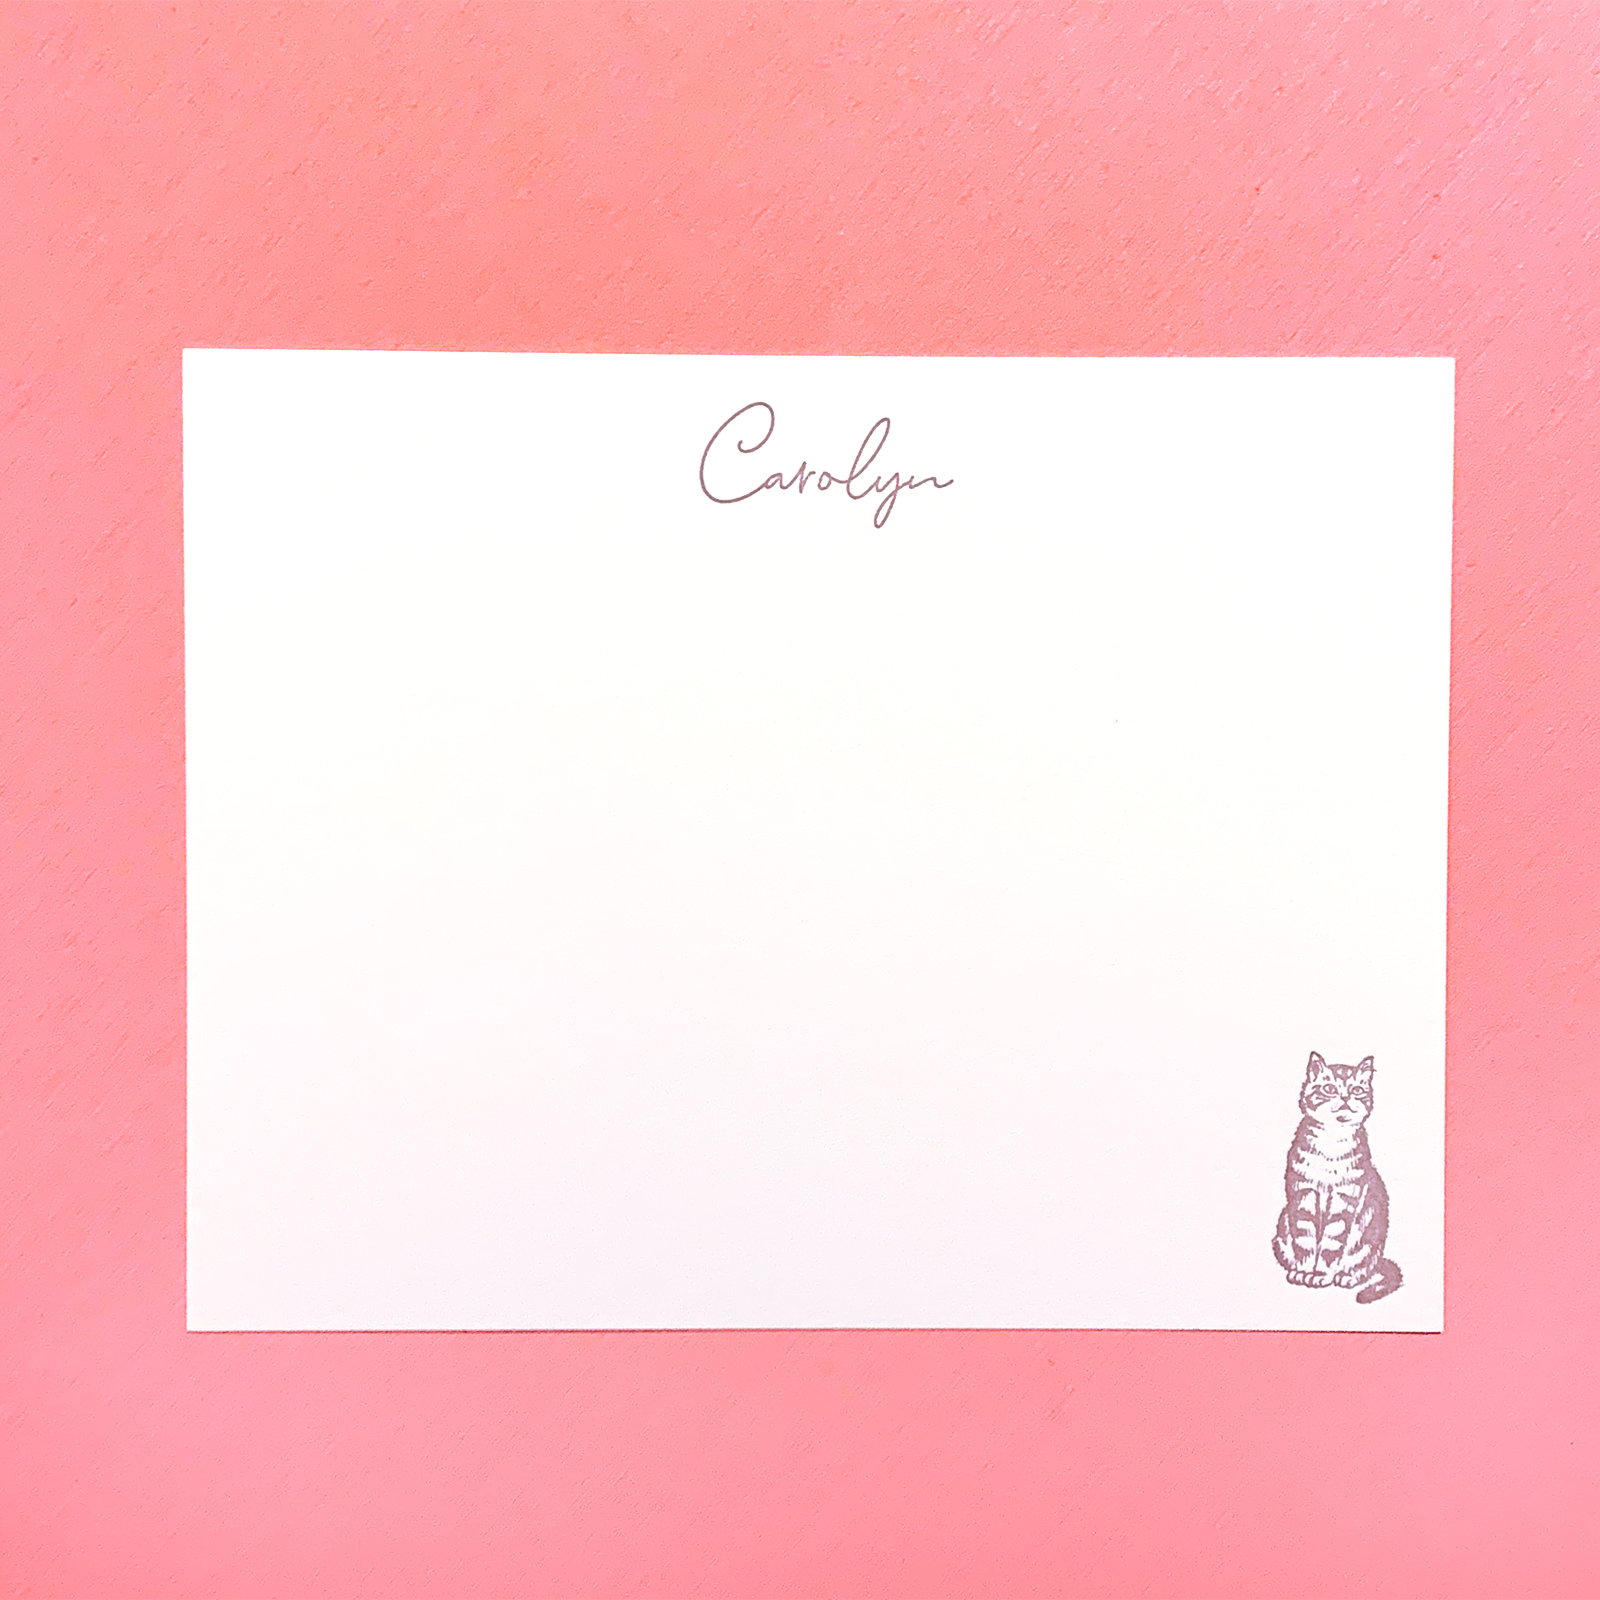 Letterpress Cat Cards NYC